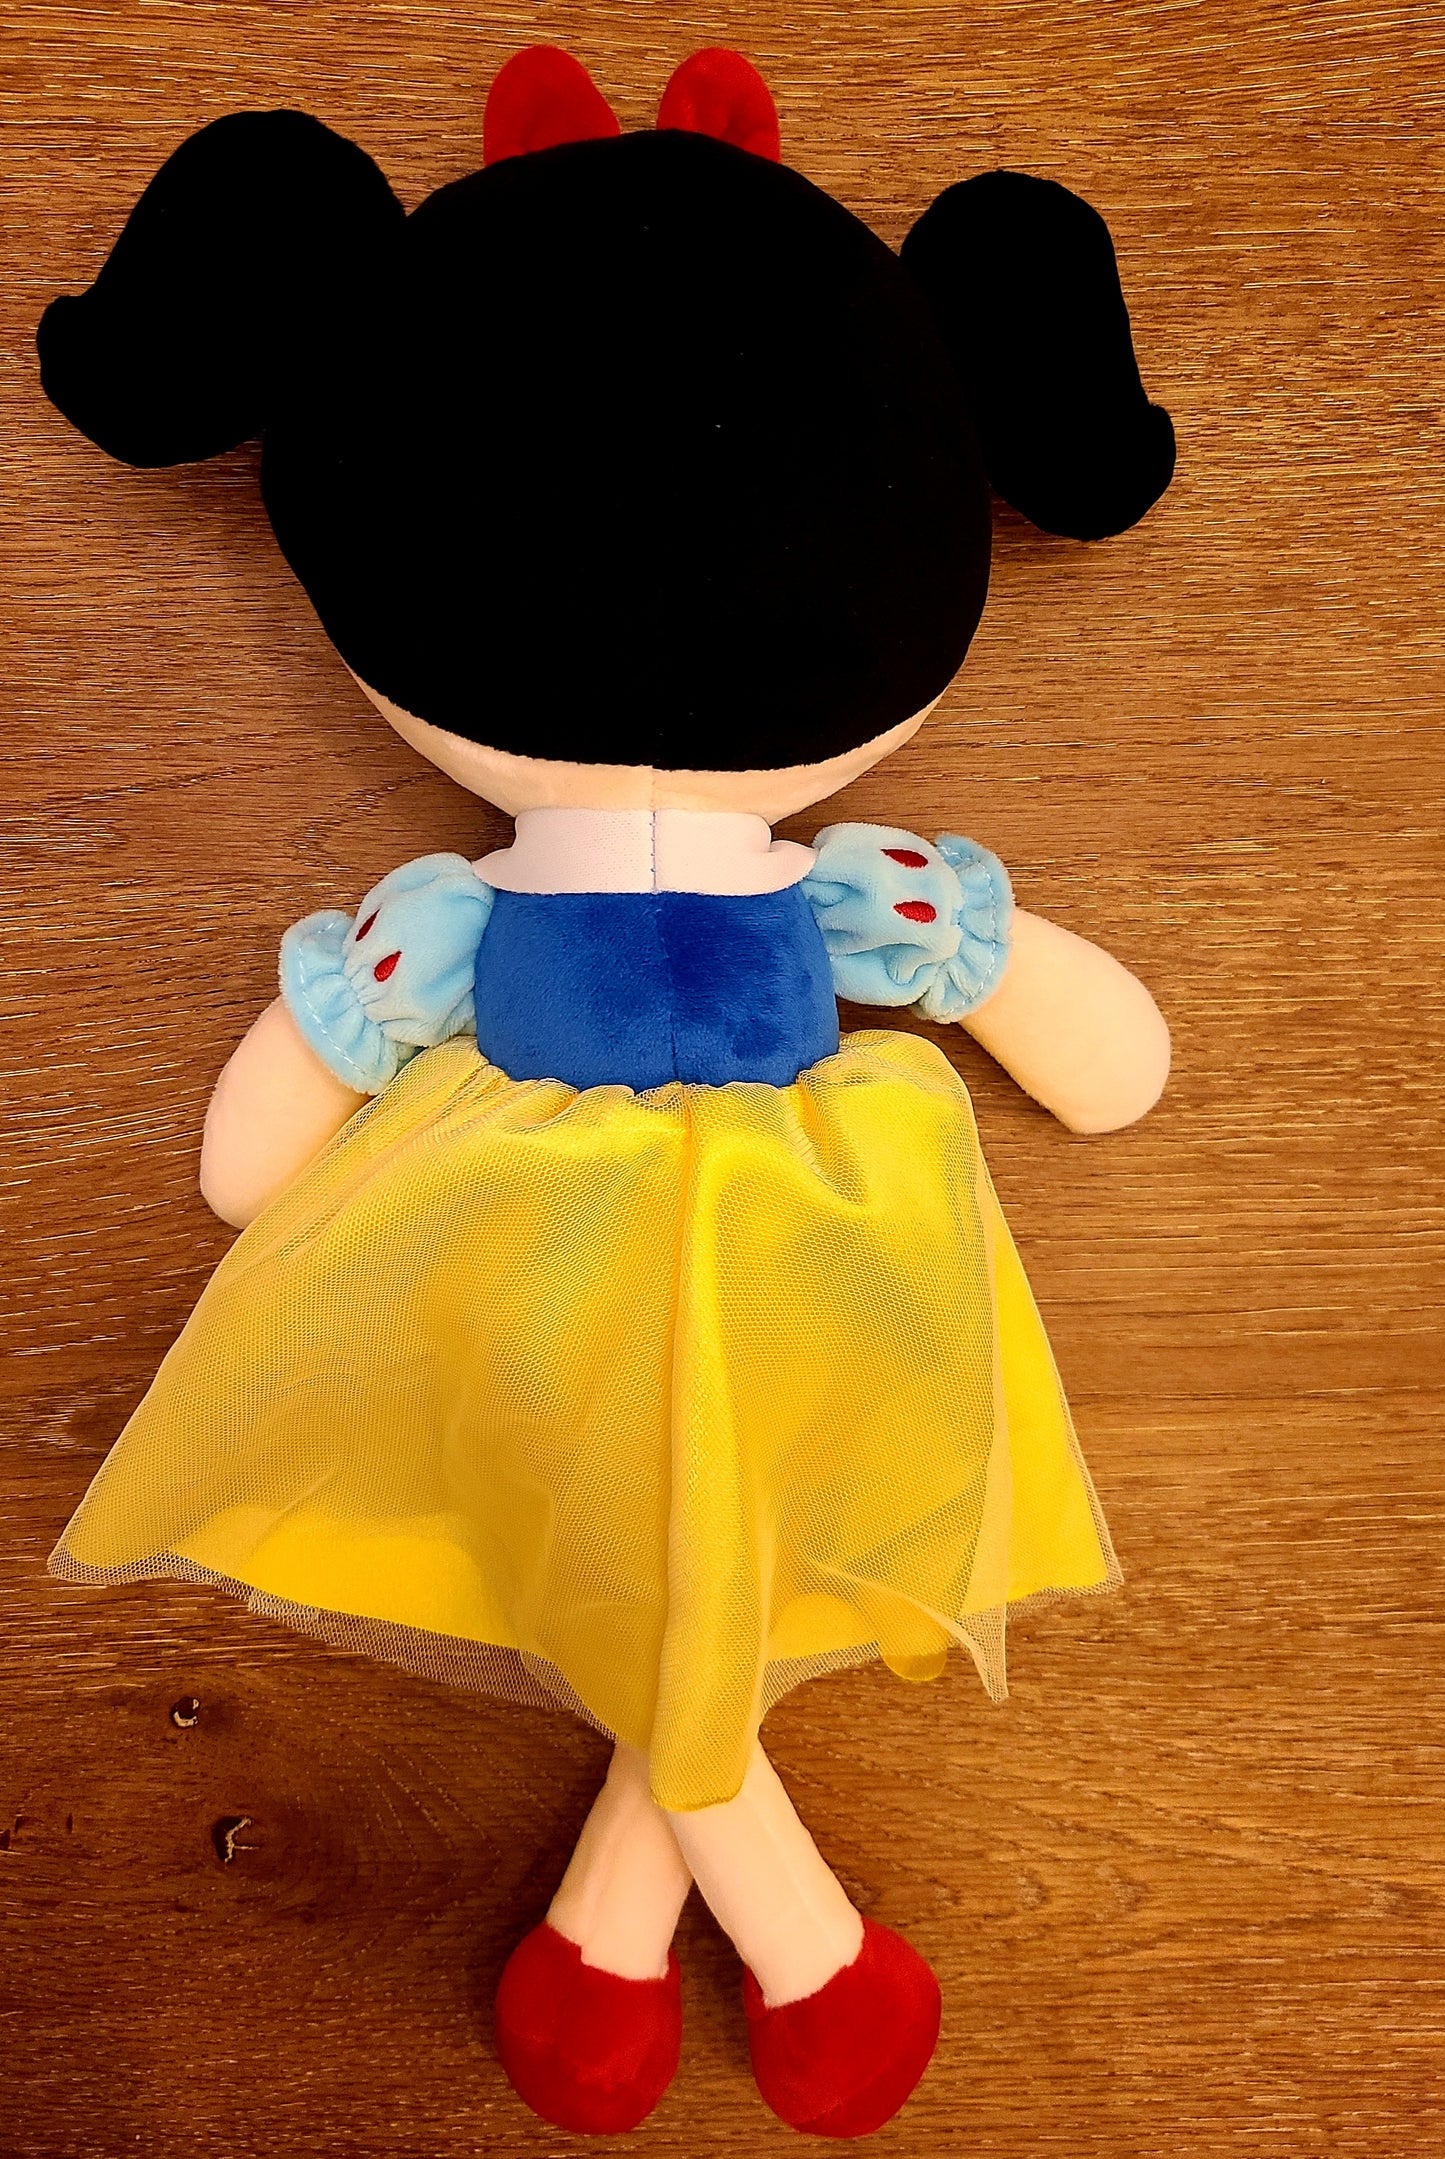 Soft Rag 15in Snow white Inspired Baby Girl Plush Doll Toy/Handmade Baby Gift Toy/Decor